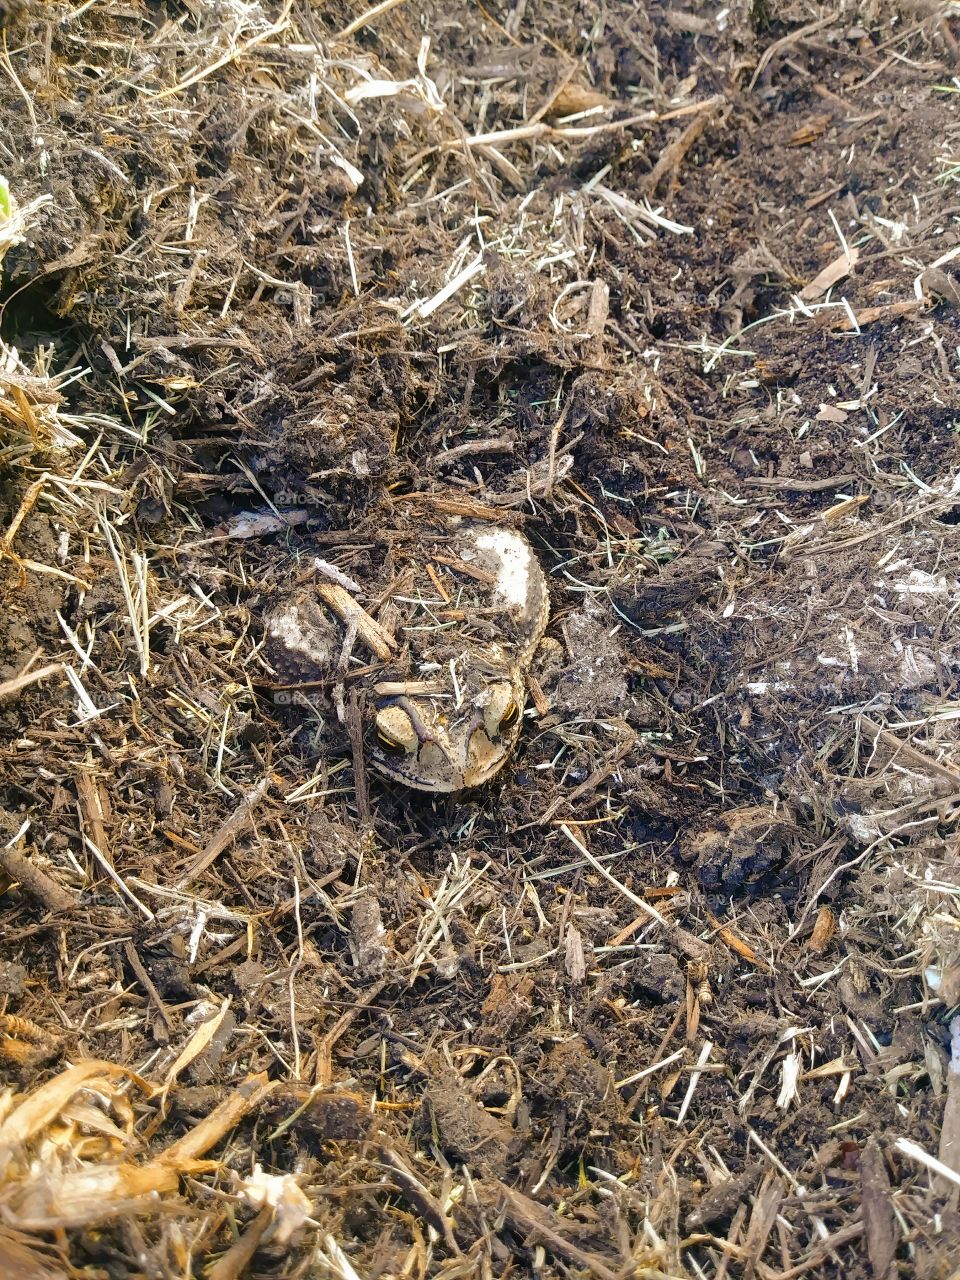 Frog in mulch